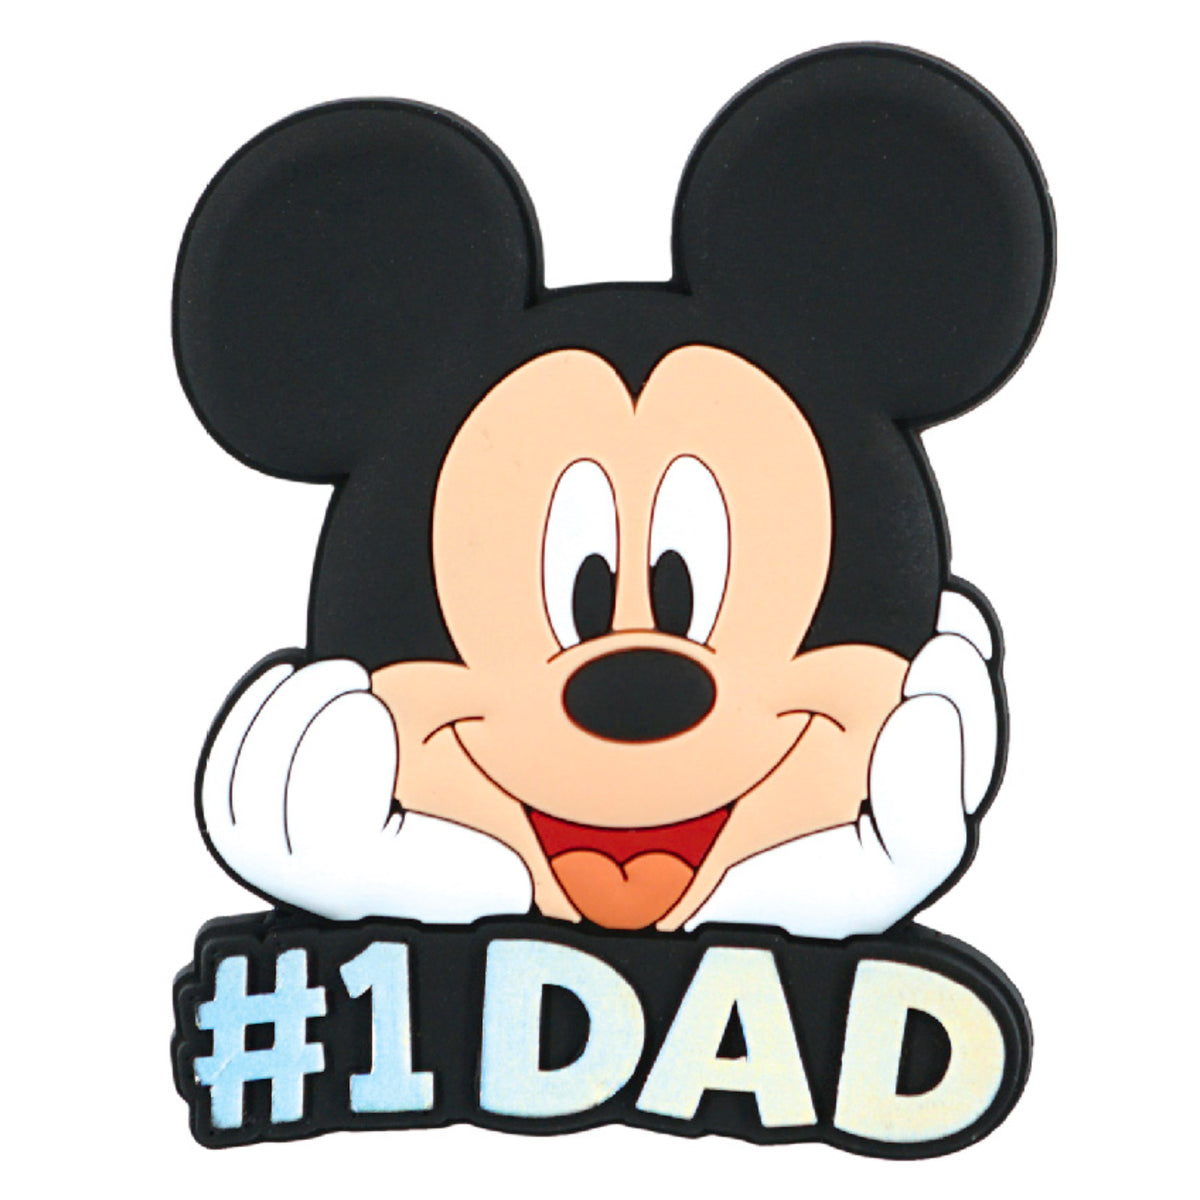 Mickey – No.1 Dad – Novelty Magnet